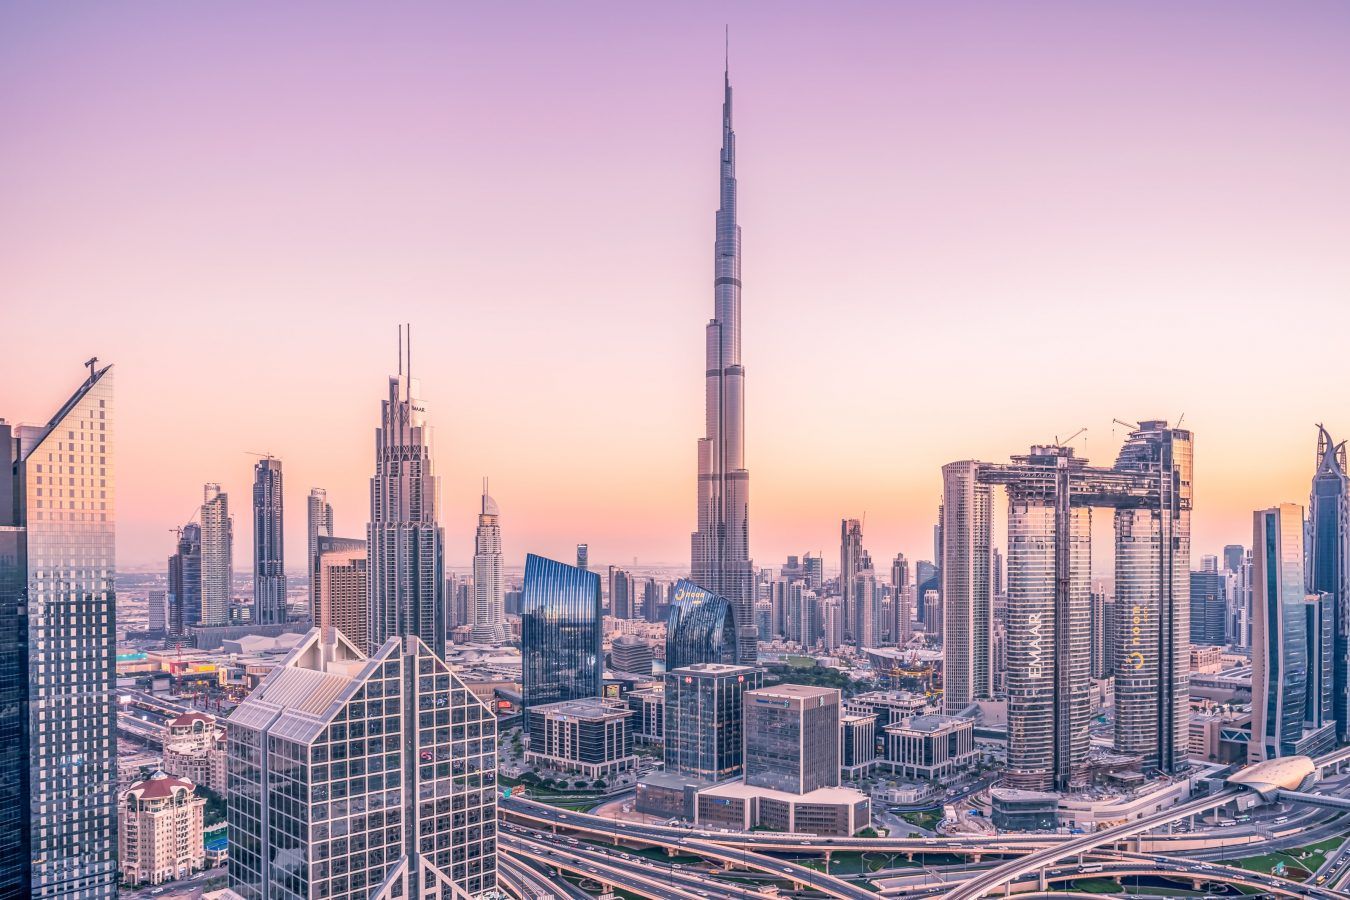 Dubai’s First Michelin Guide Awards Stars to 11 Restaurants